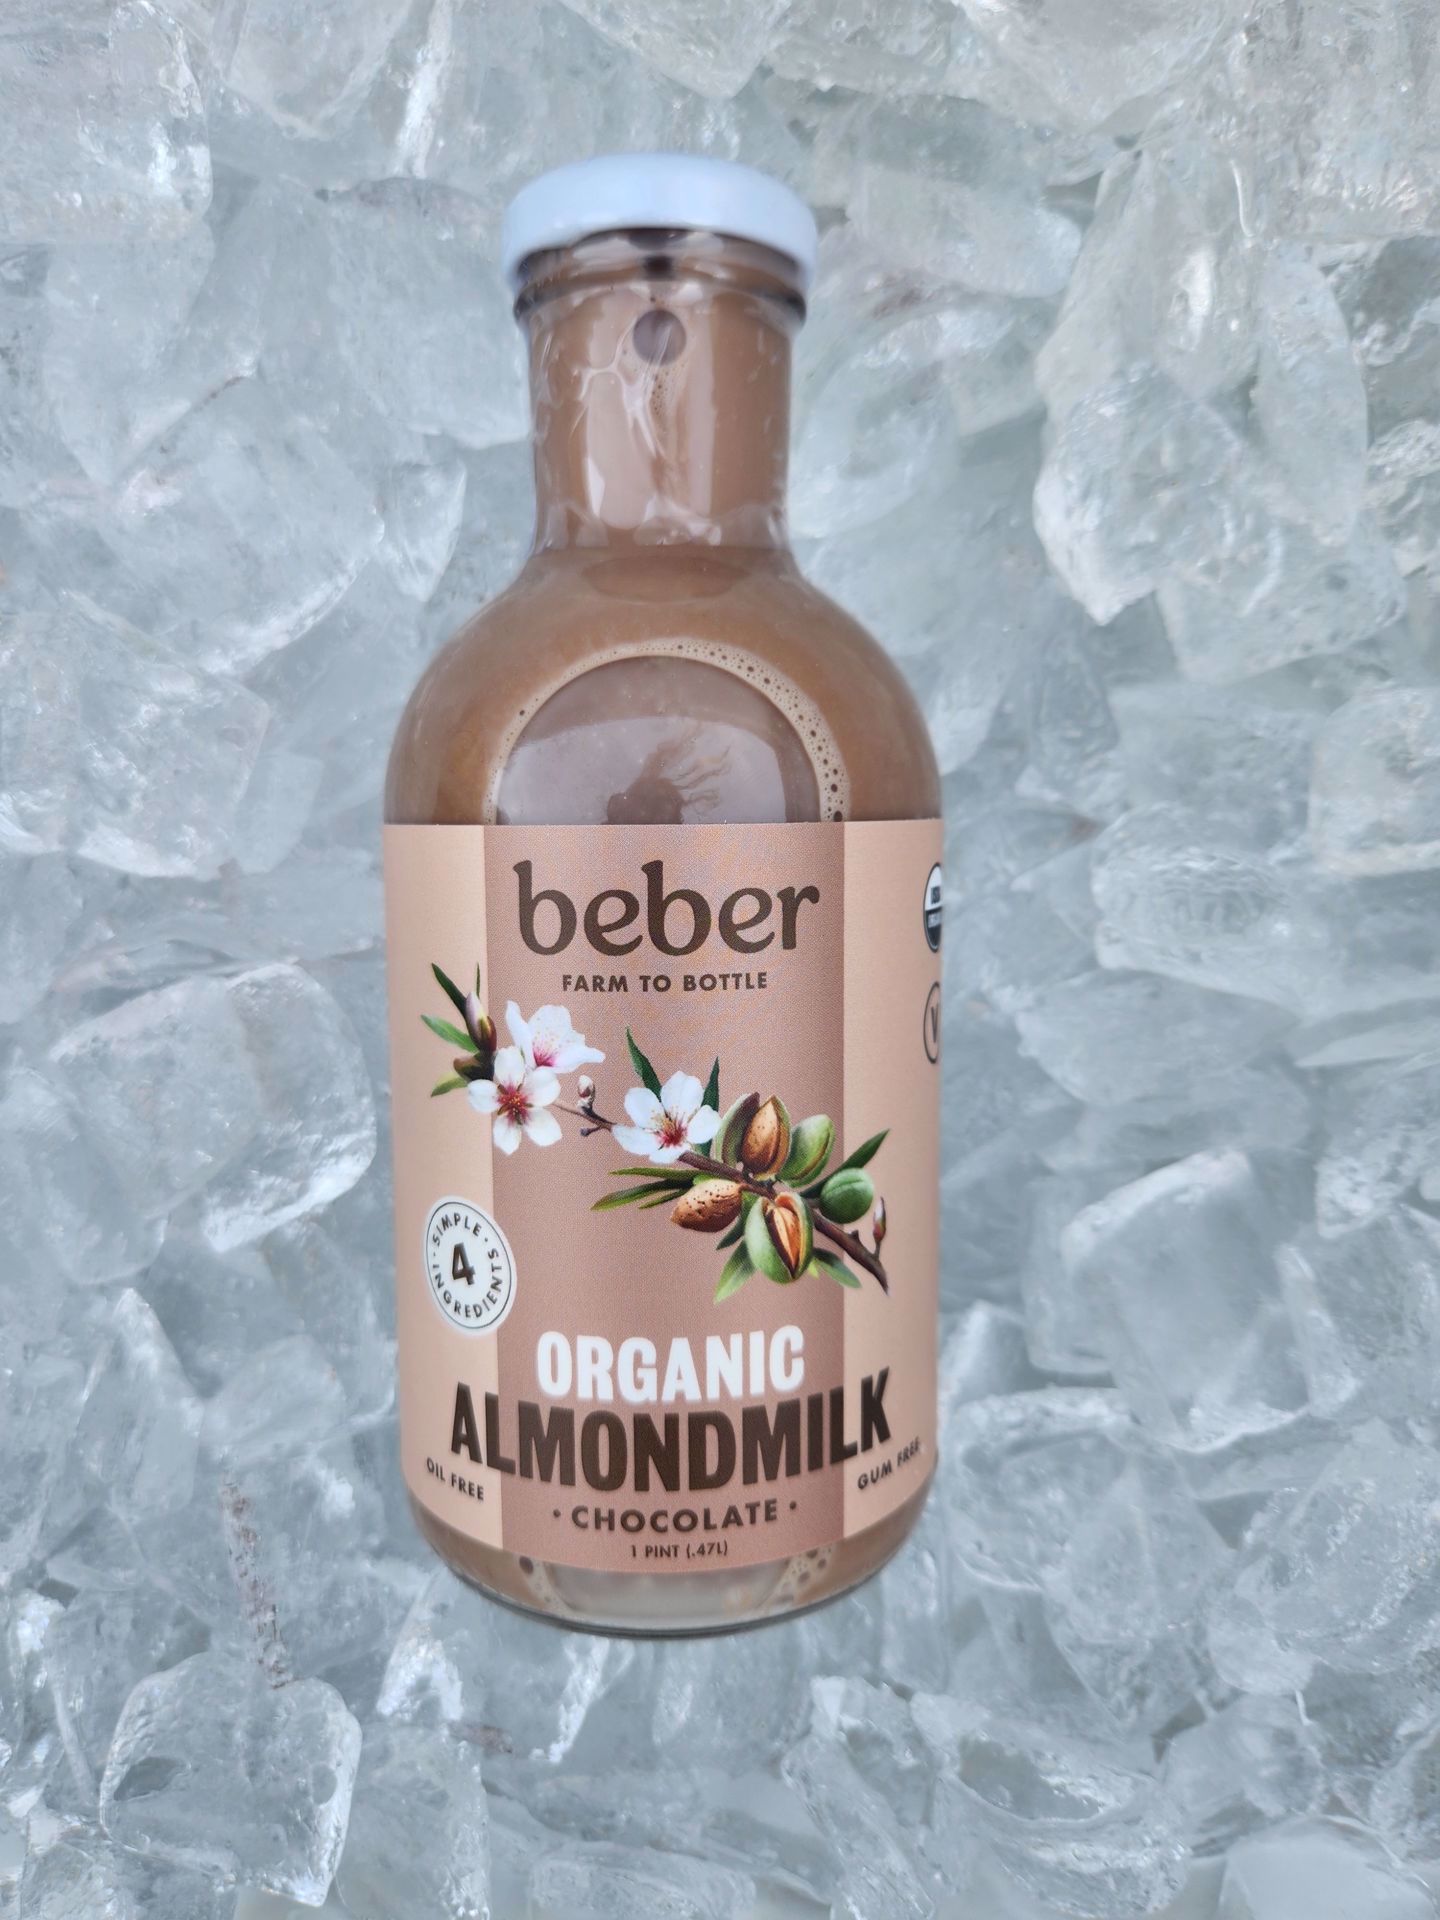 Picture of Beber Chocolate Almond Milk.